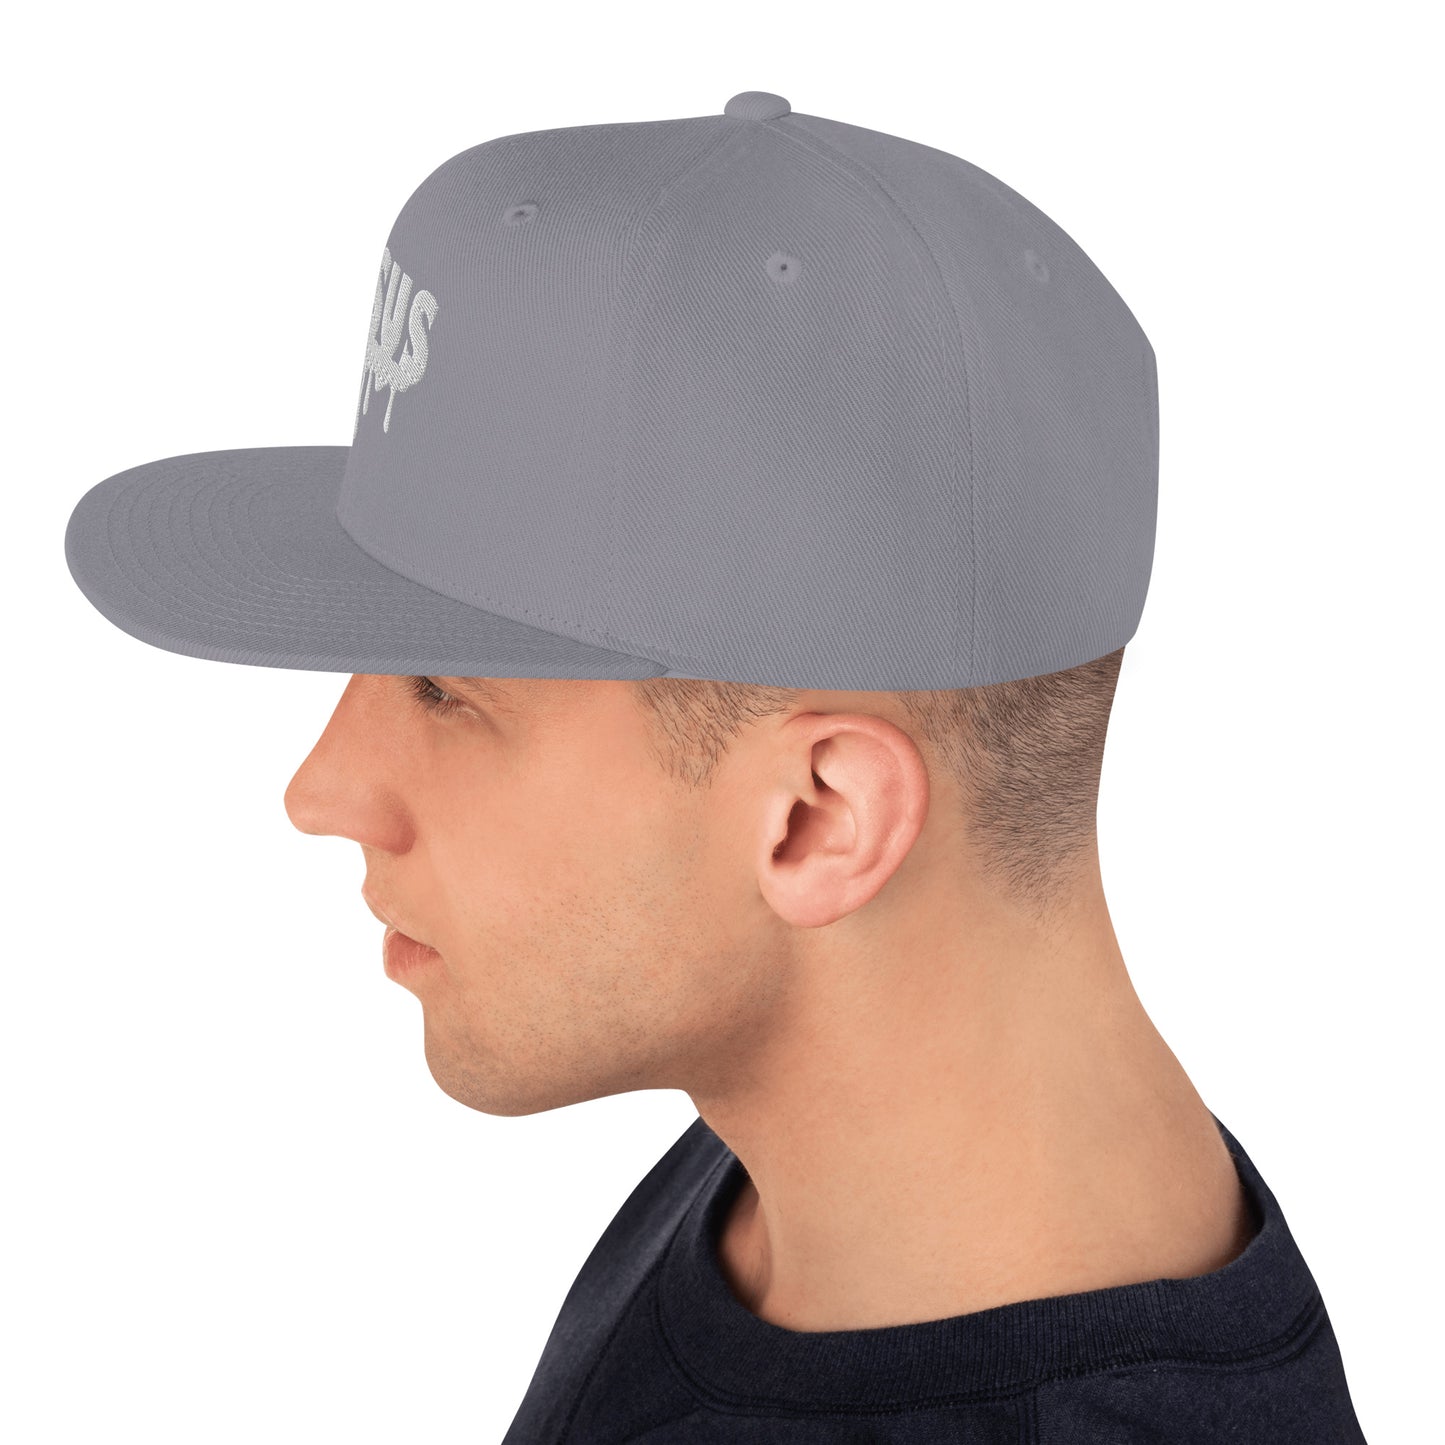 Jesus Drip Snapback Hat (Unisex)